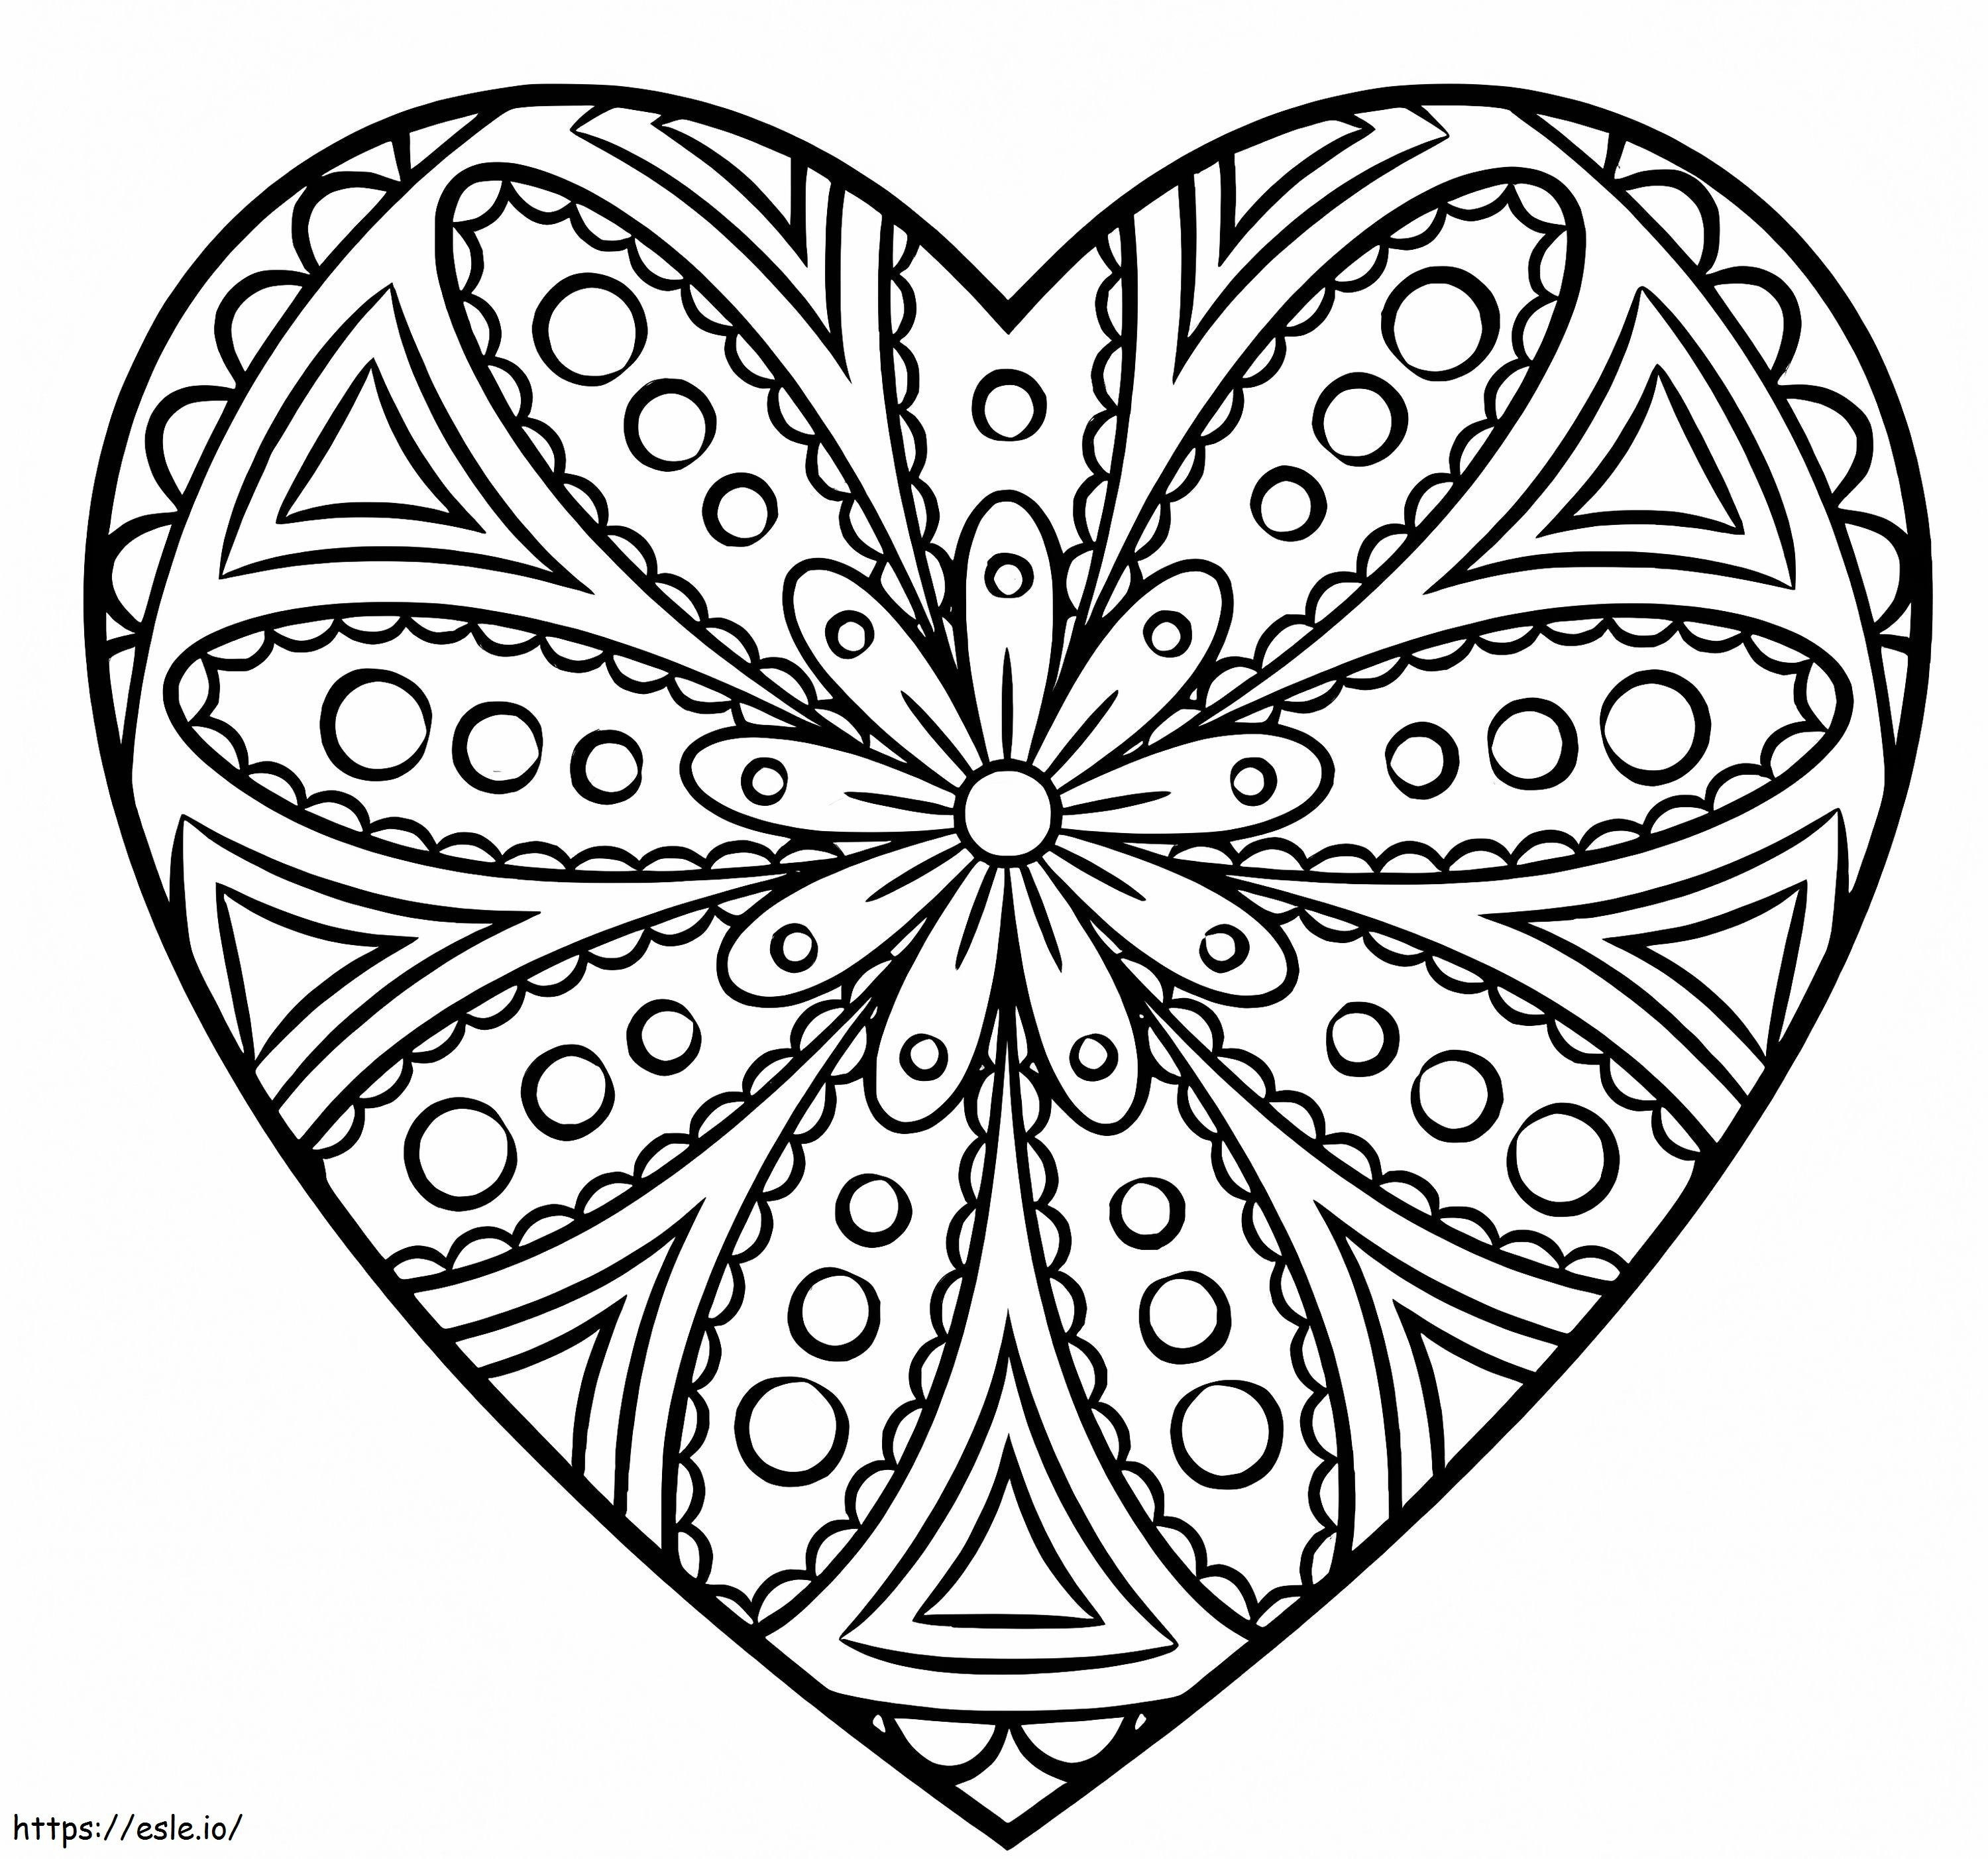 Coloriage Mandala coeur simple à imprimer dessin